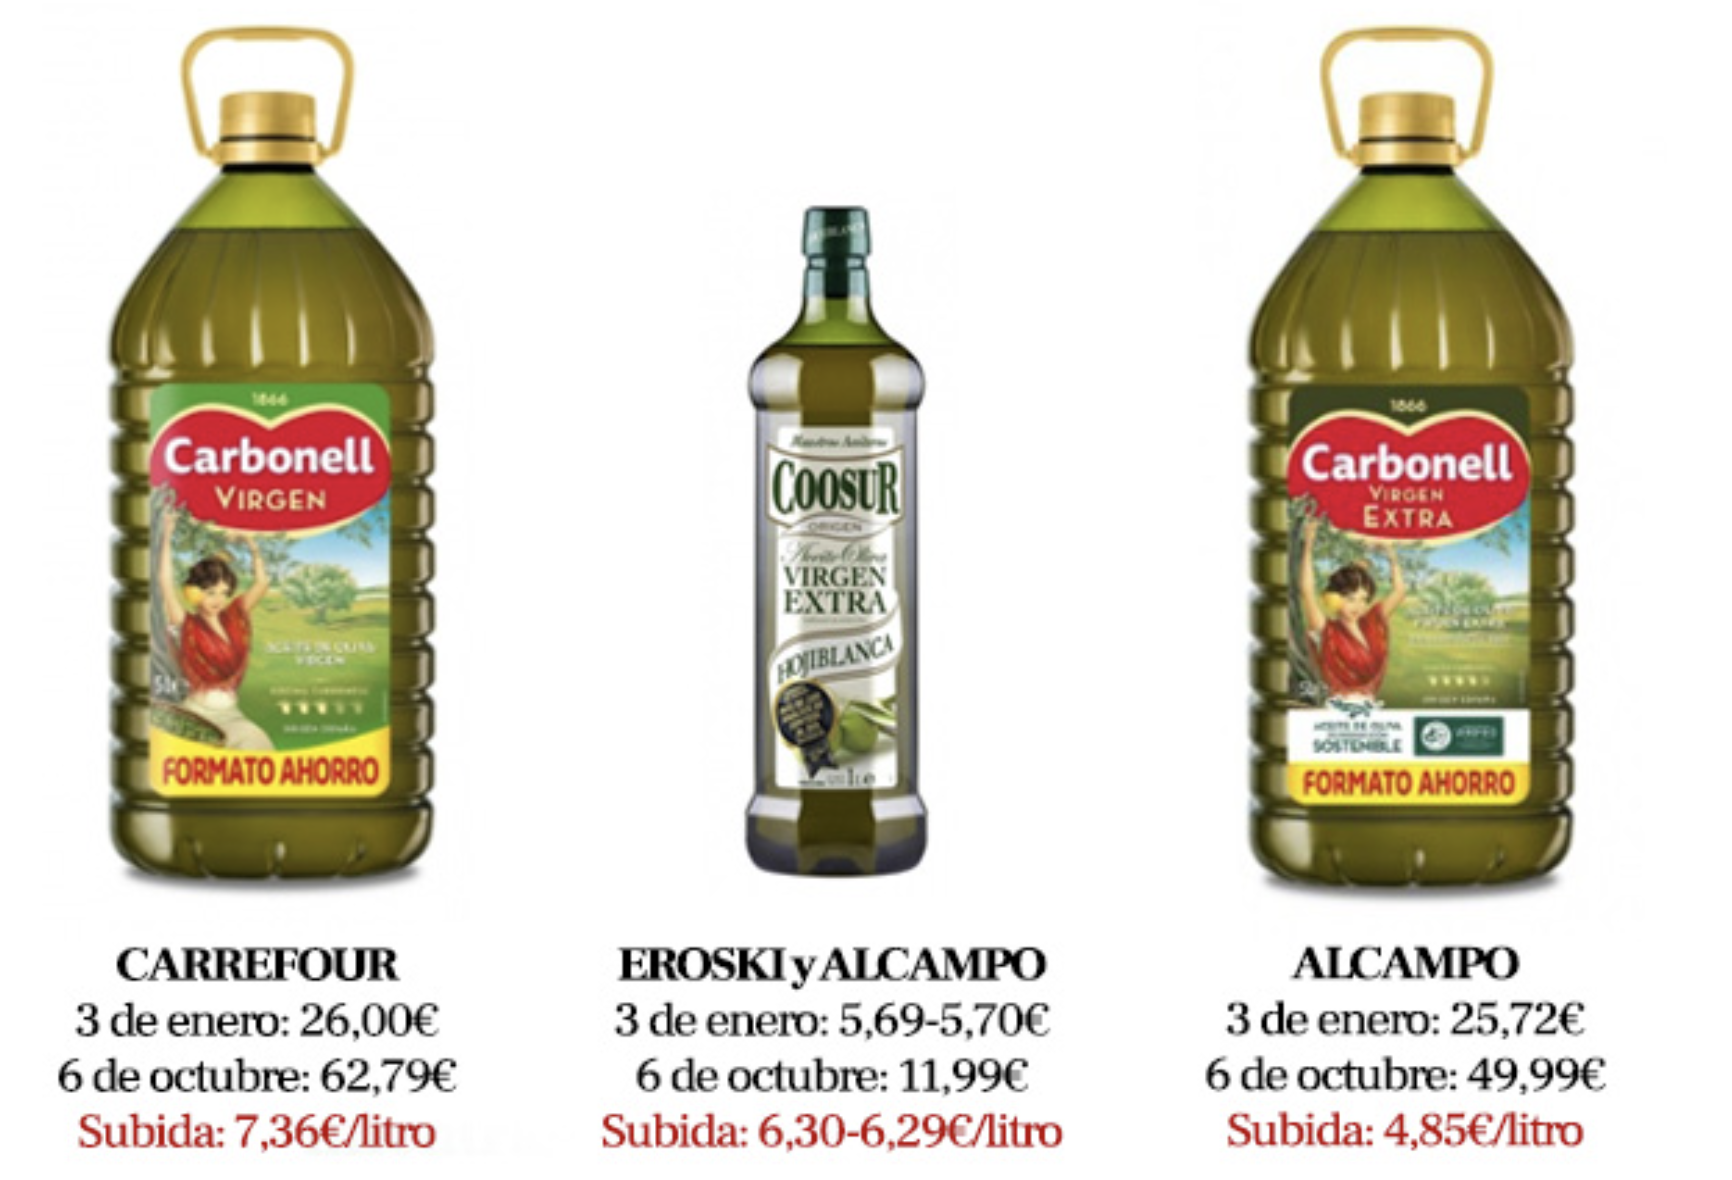 Aceite de oliva virgen Serie Oro 1L – Coosur